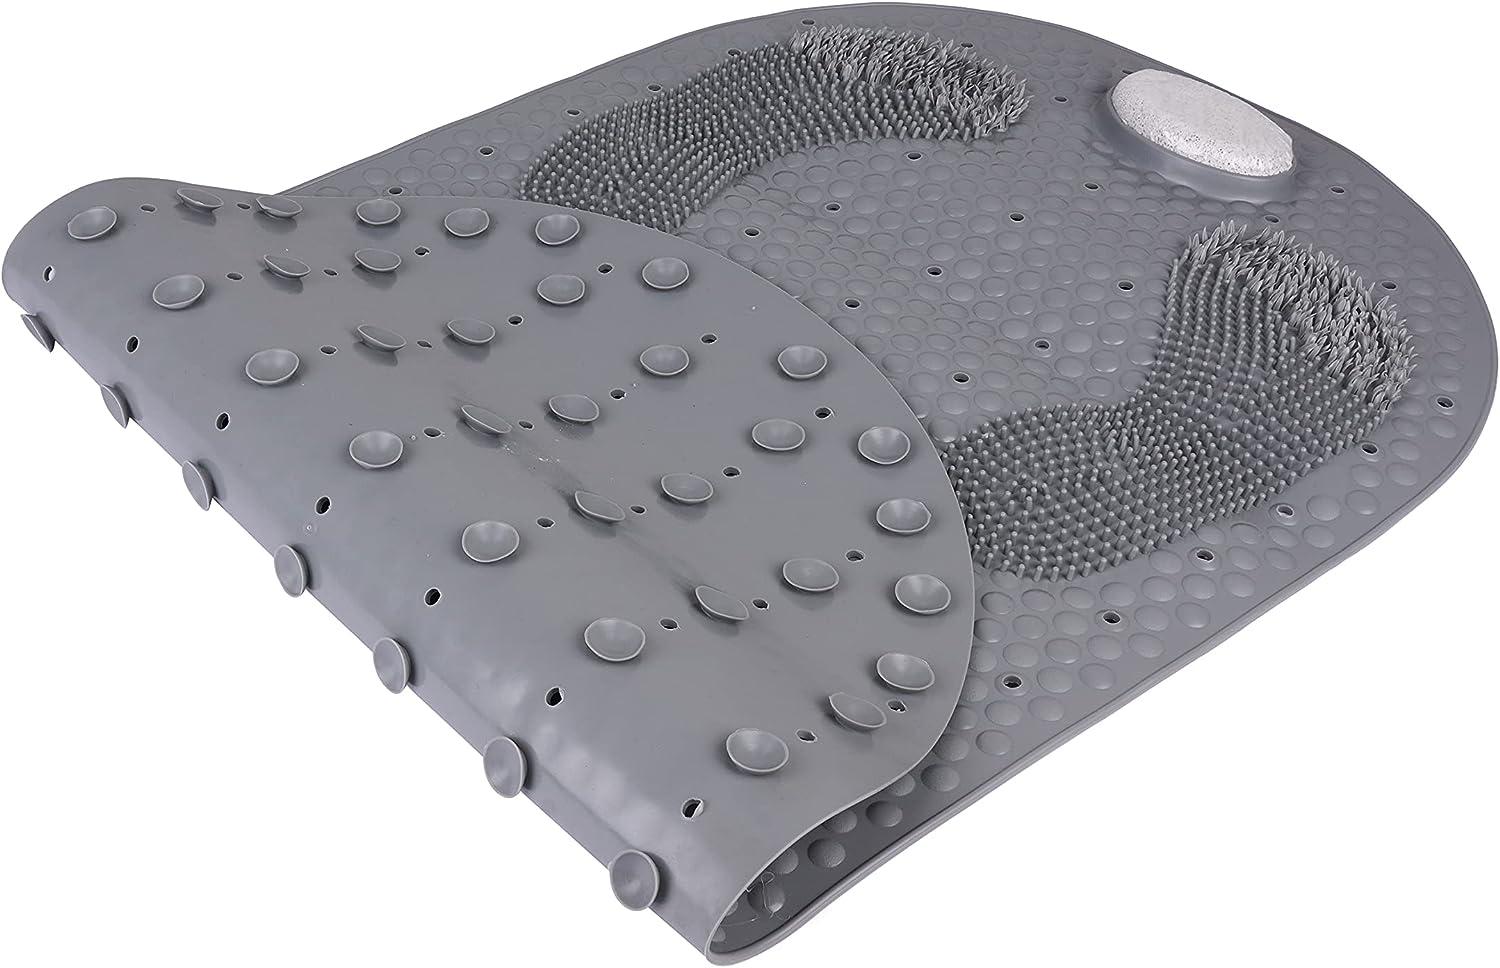 Foot Scrubber Shower Mat with Pumice Stone 80 * 40 cm Anti-Slip Shower Foot  Scrubber